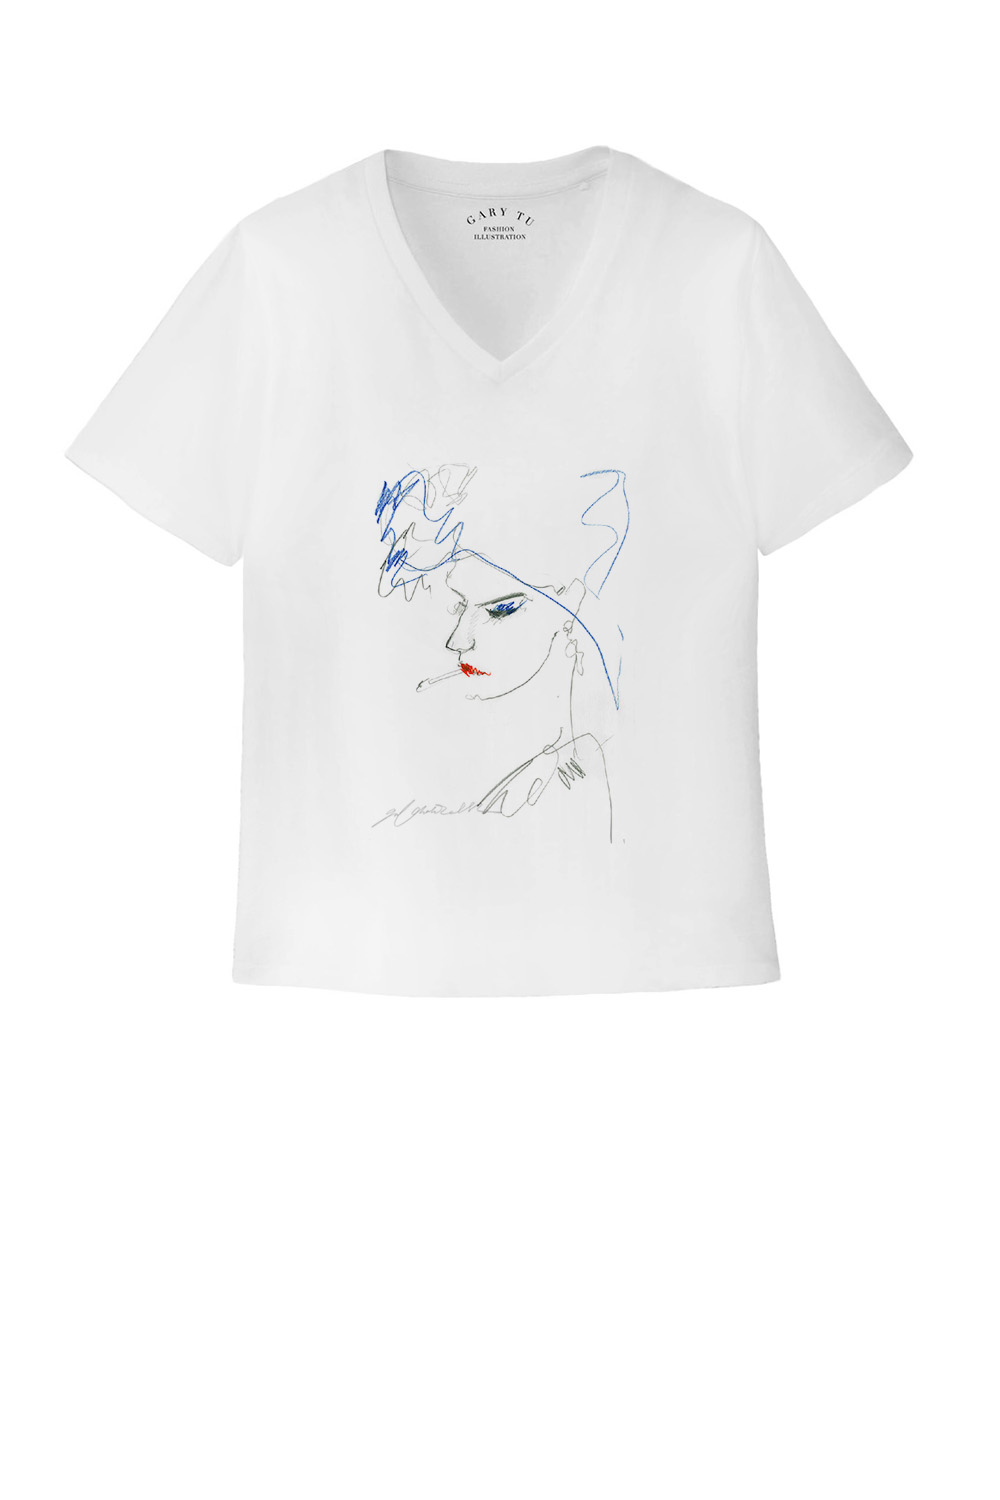 T-shirt Drawing 001